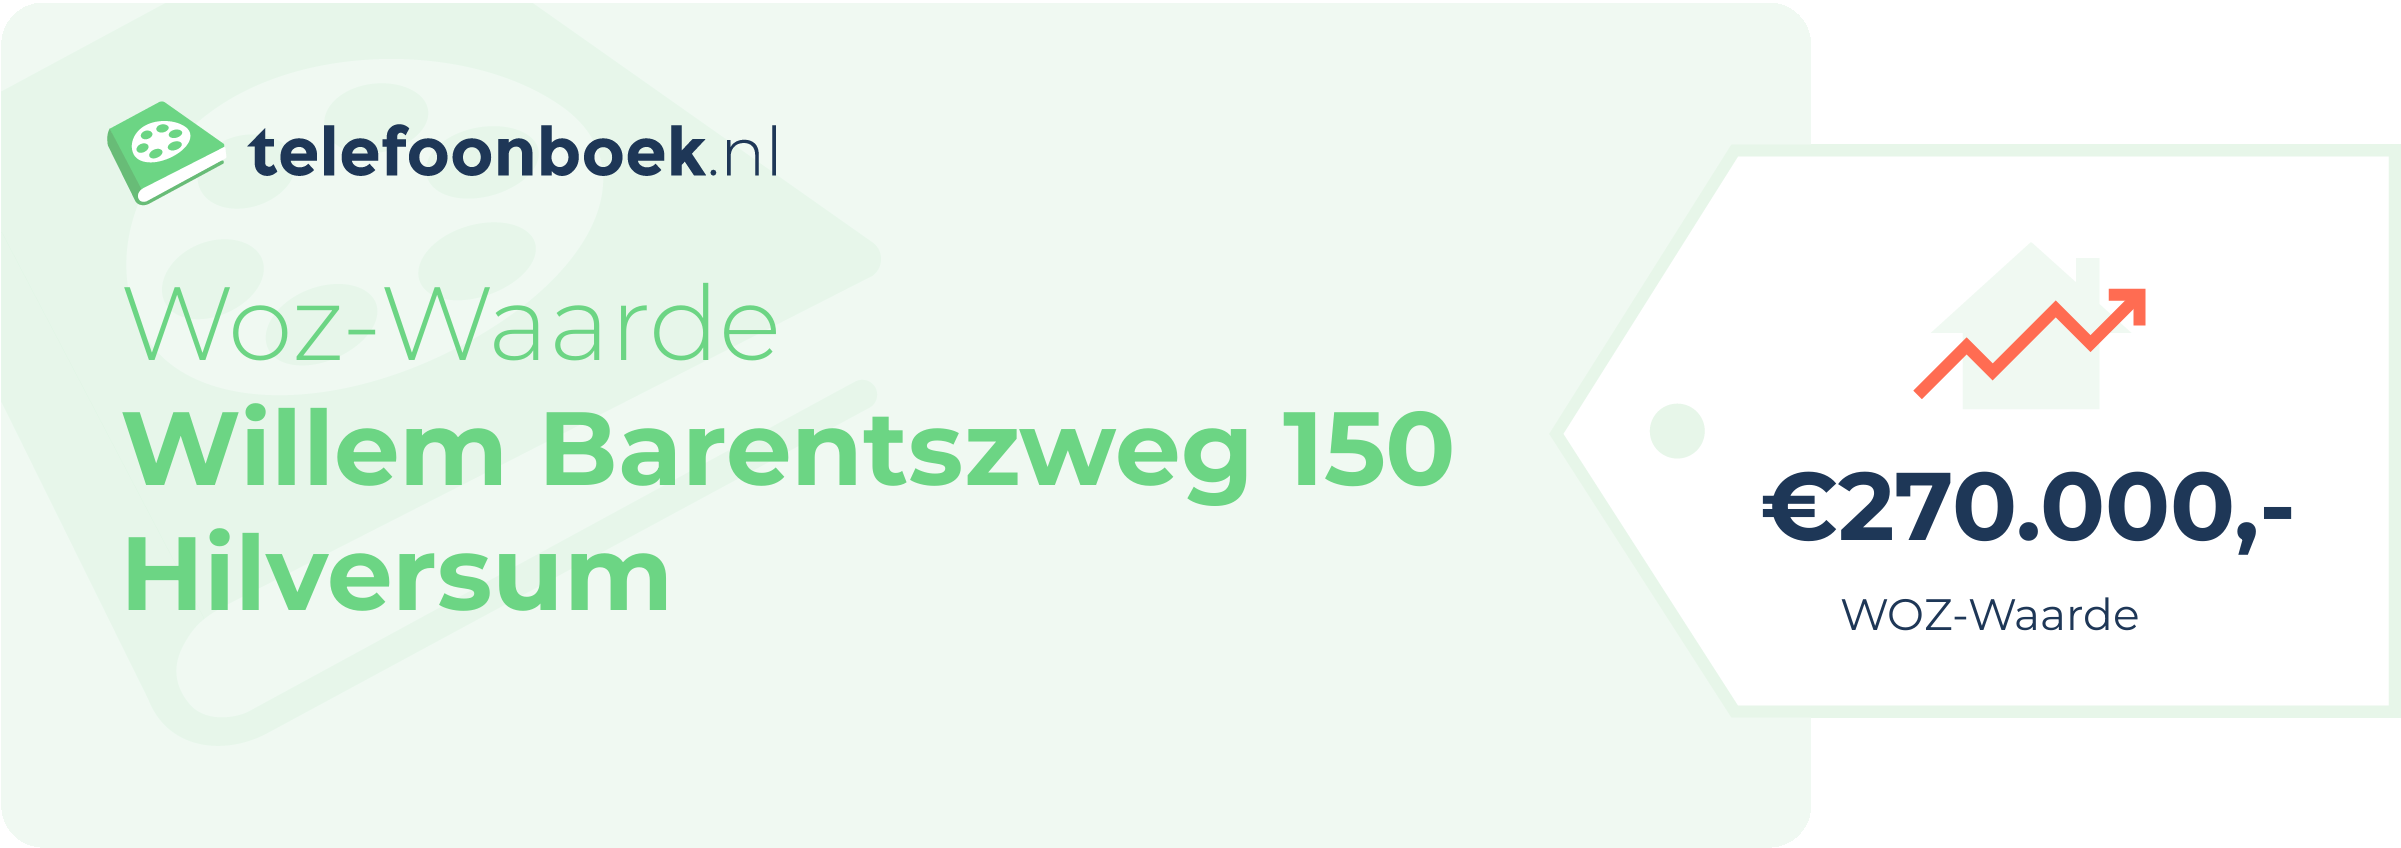 WOZ-waarde Willem Barentszweg 150 Hilversum